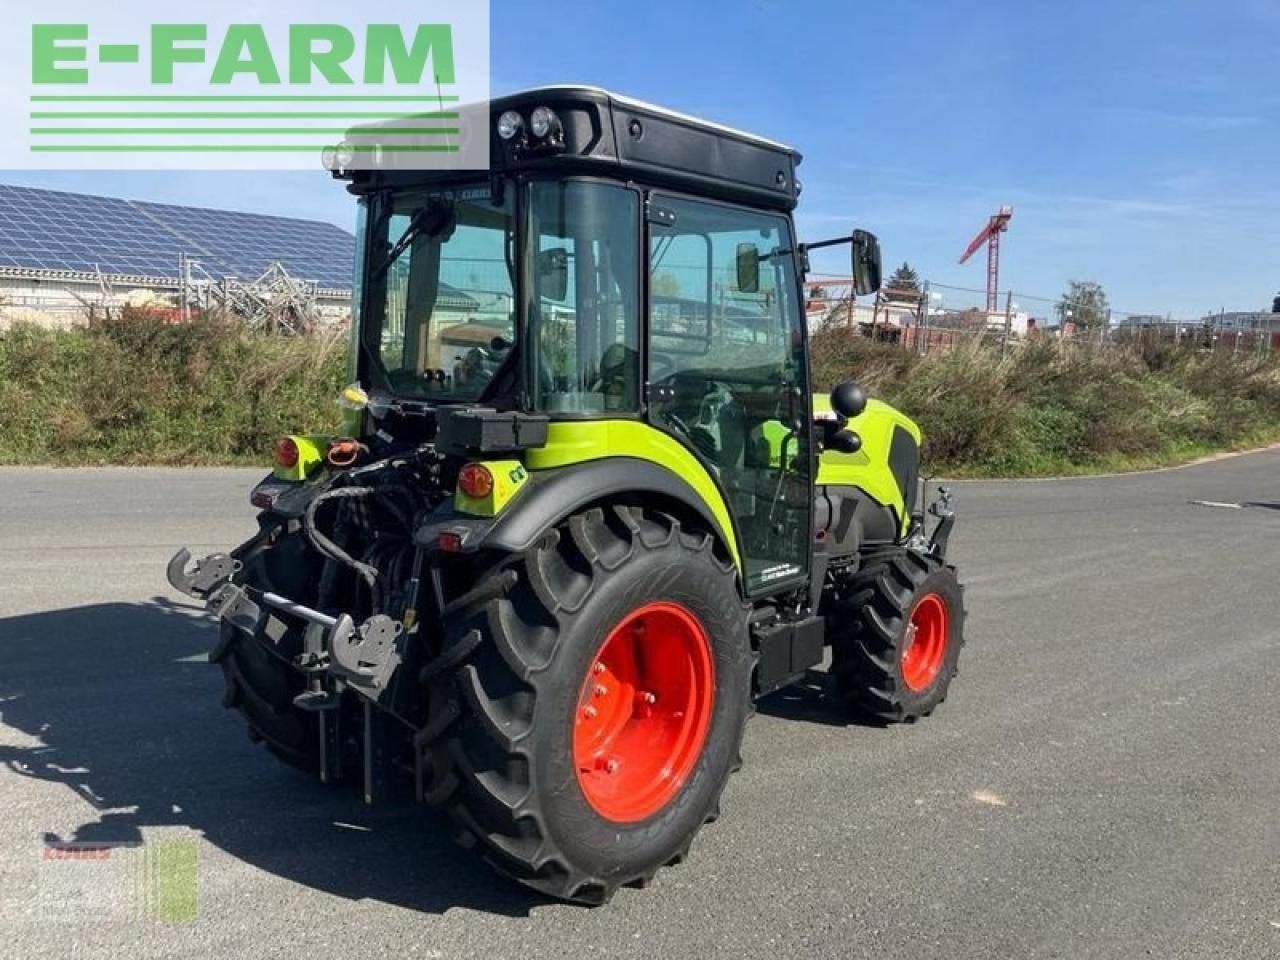 Farm tractor CLAAS nexos 240 m advanced vf F